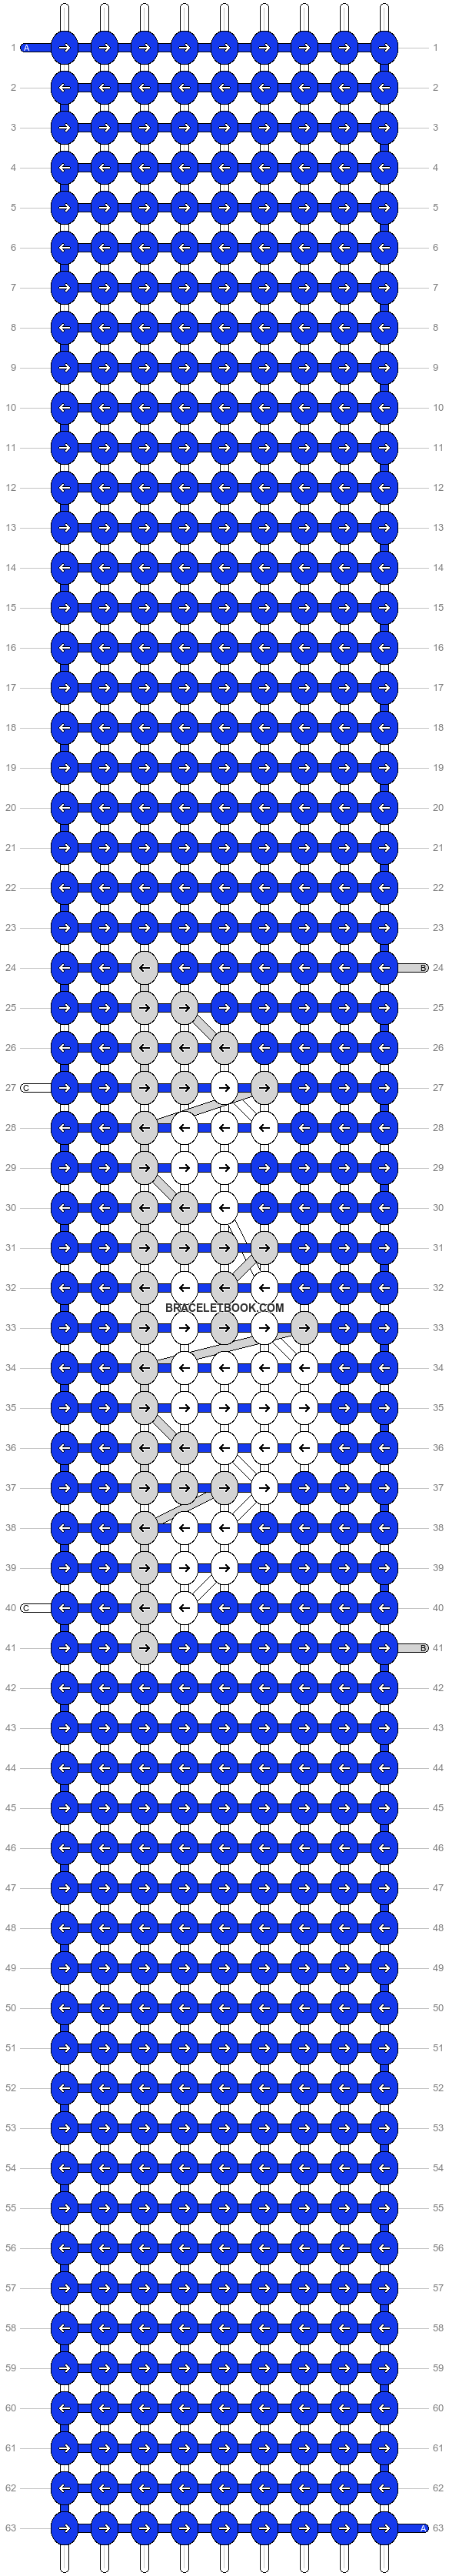 Alpha pattern #50477 variation #79811 pattern